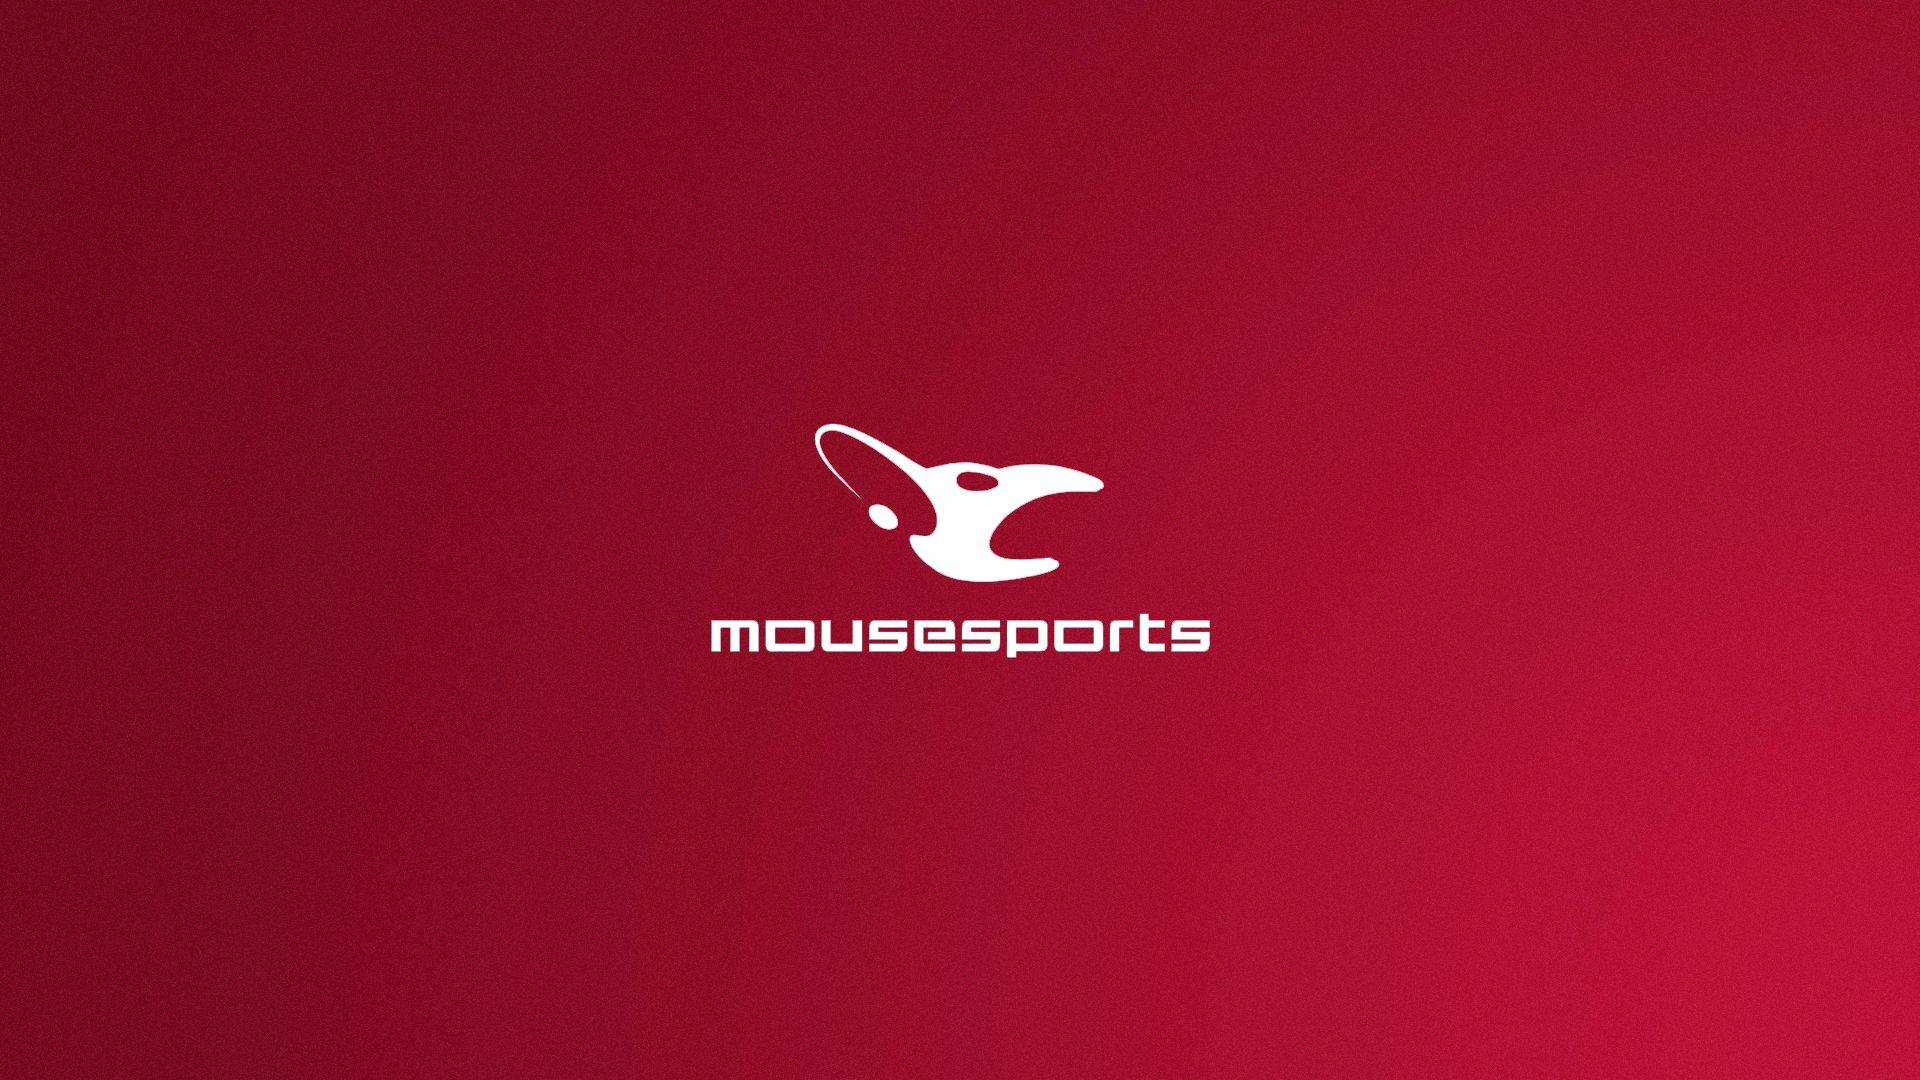 mousesports-Wallpaper